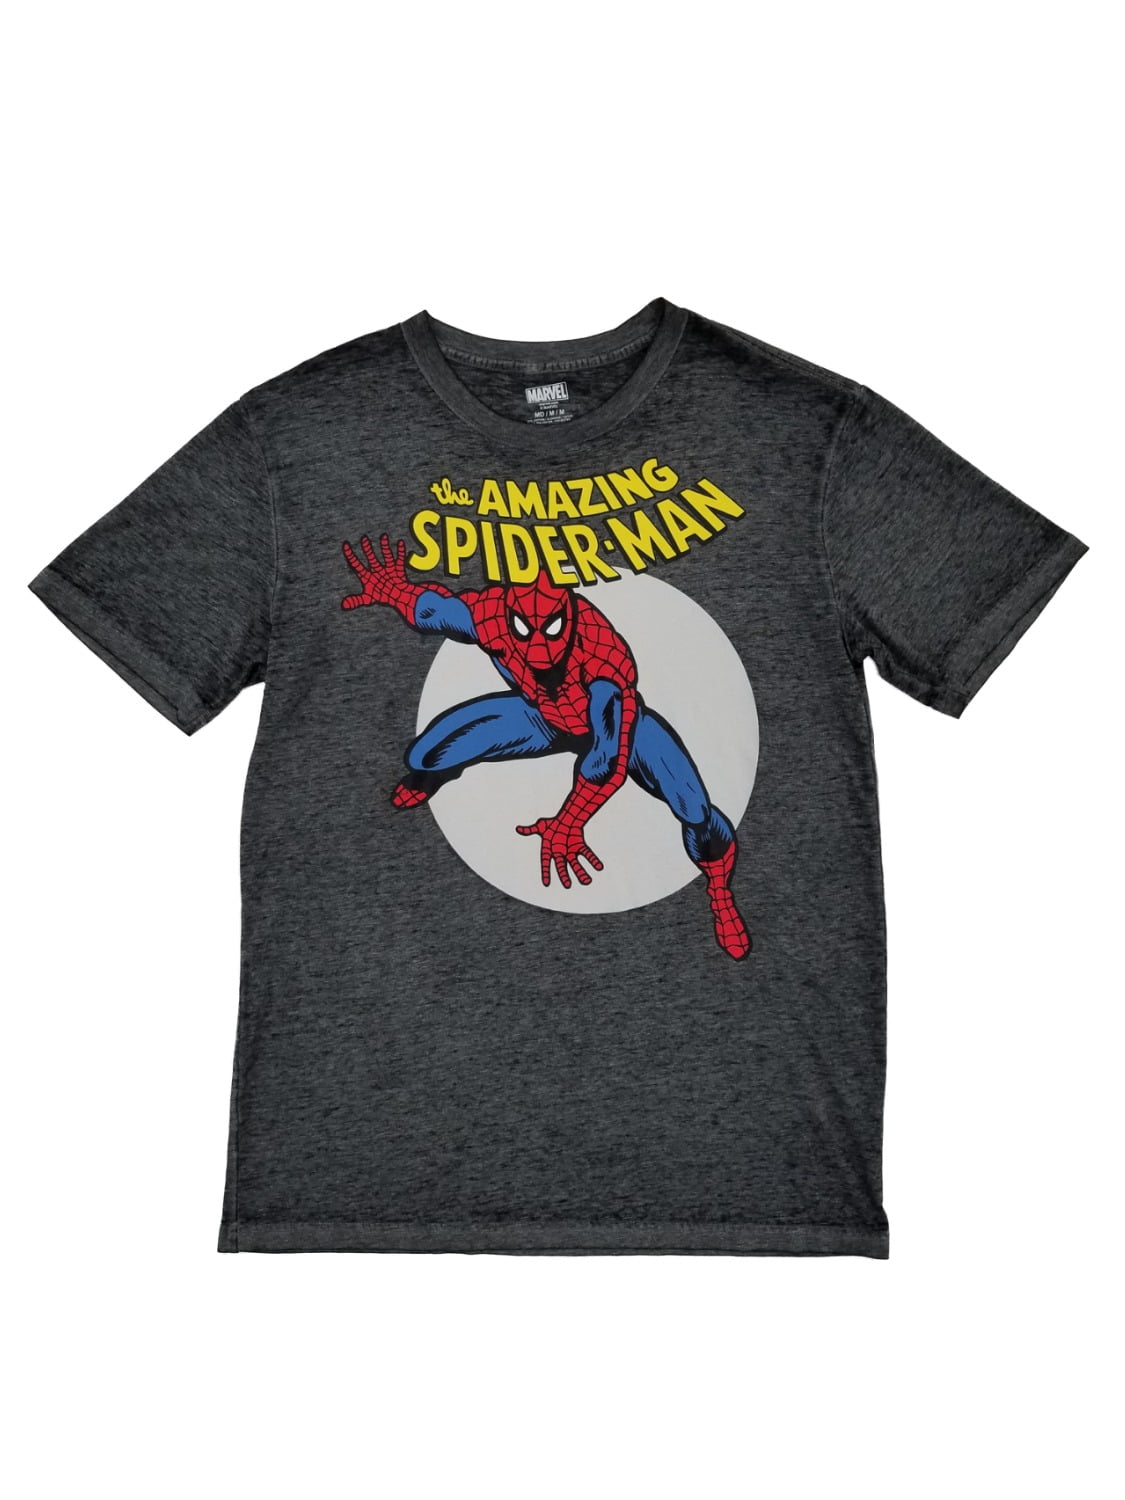 Marvel Mens Heather Gray T-Shirt Medium The Amazing Graphic Spider-Man